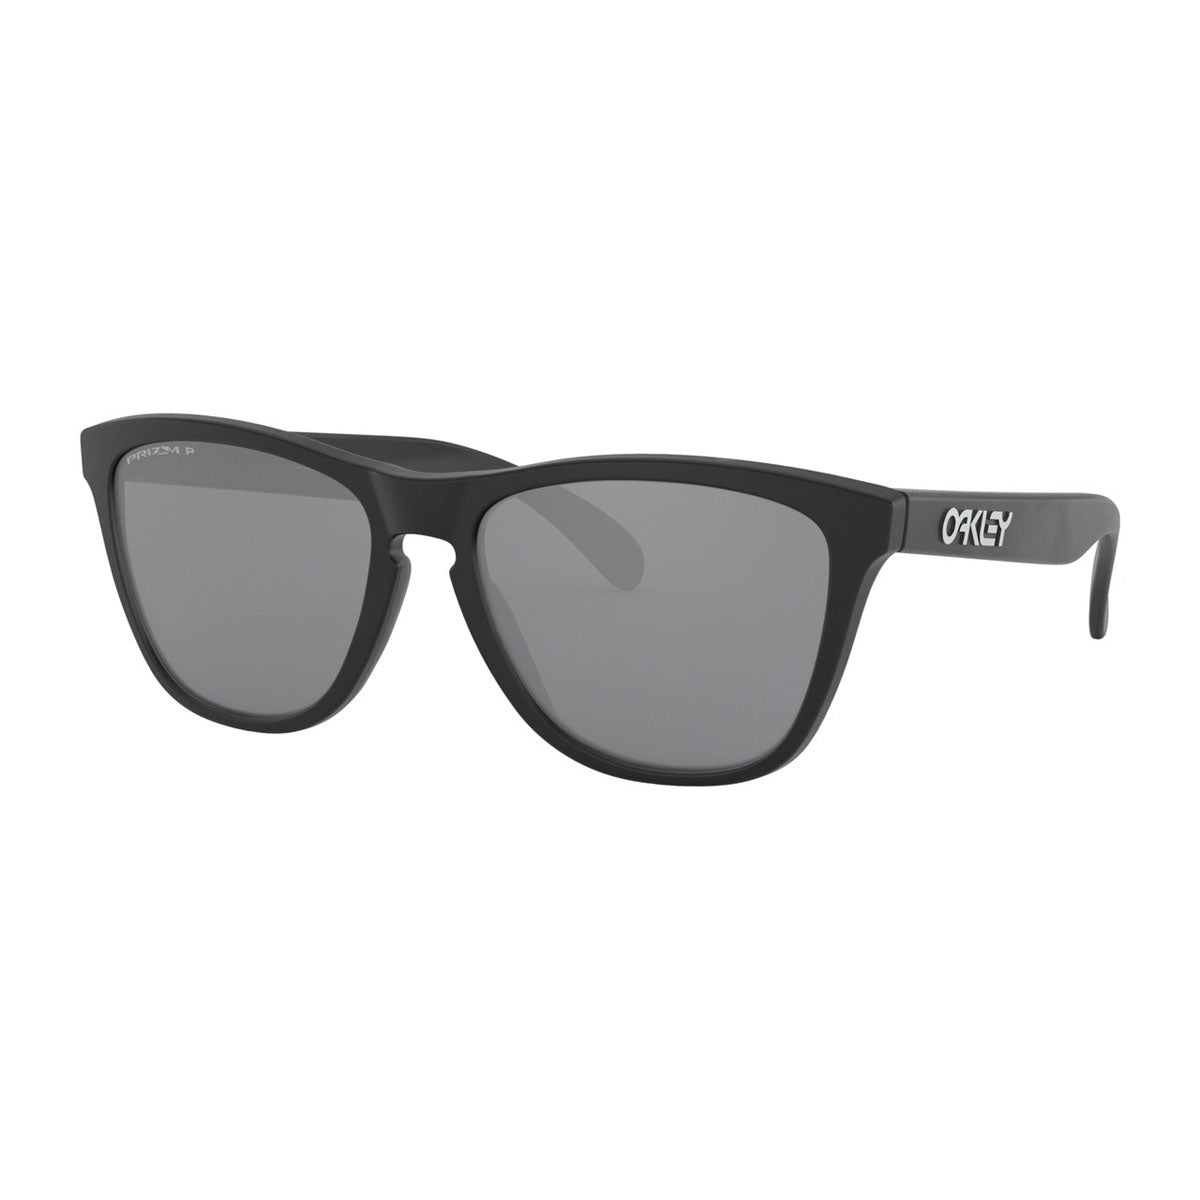 Oakley Frogskins Sunglasses - Matte Black / PRIZM Black Polarized Lens - OO9013-F755